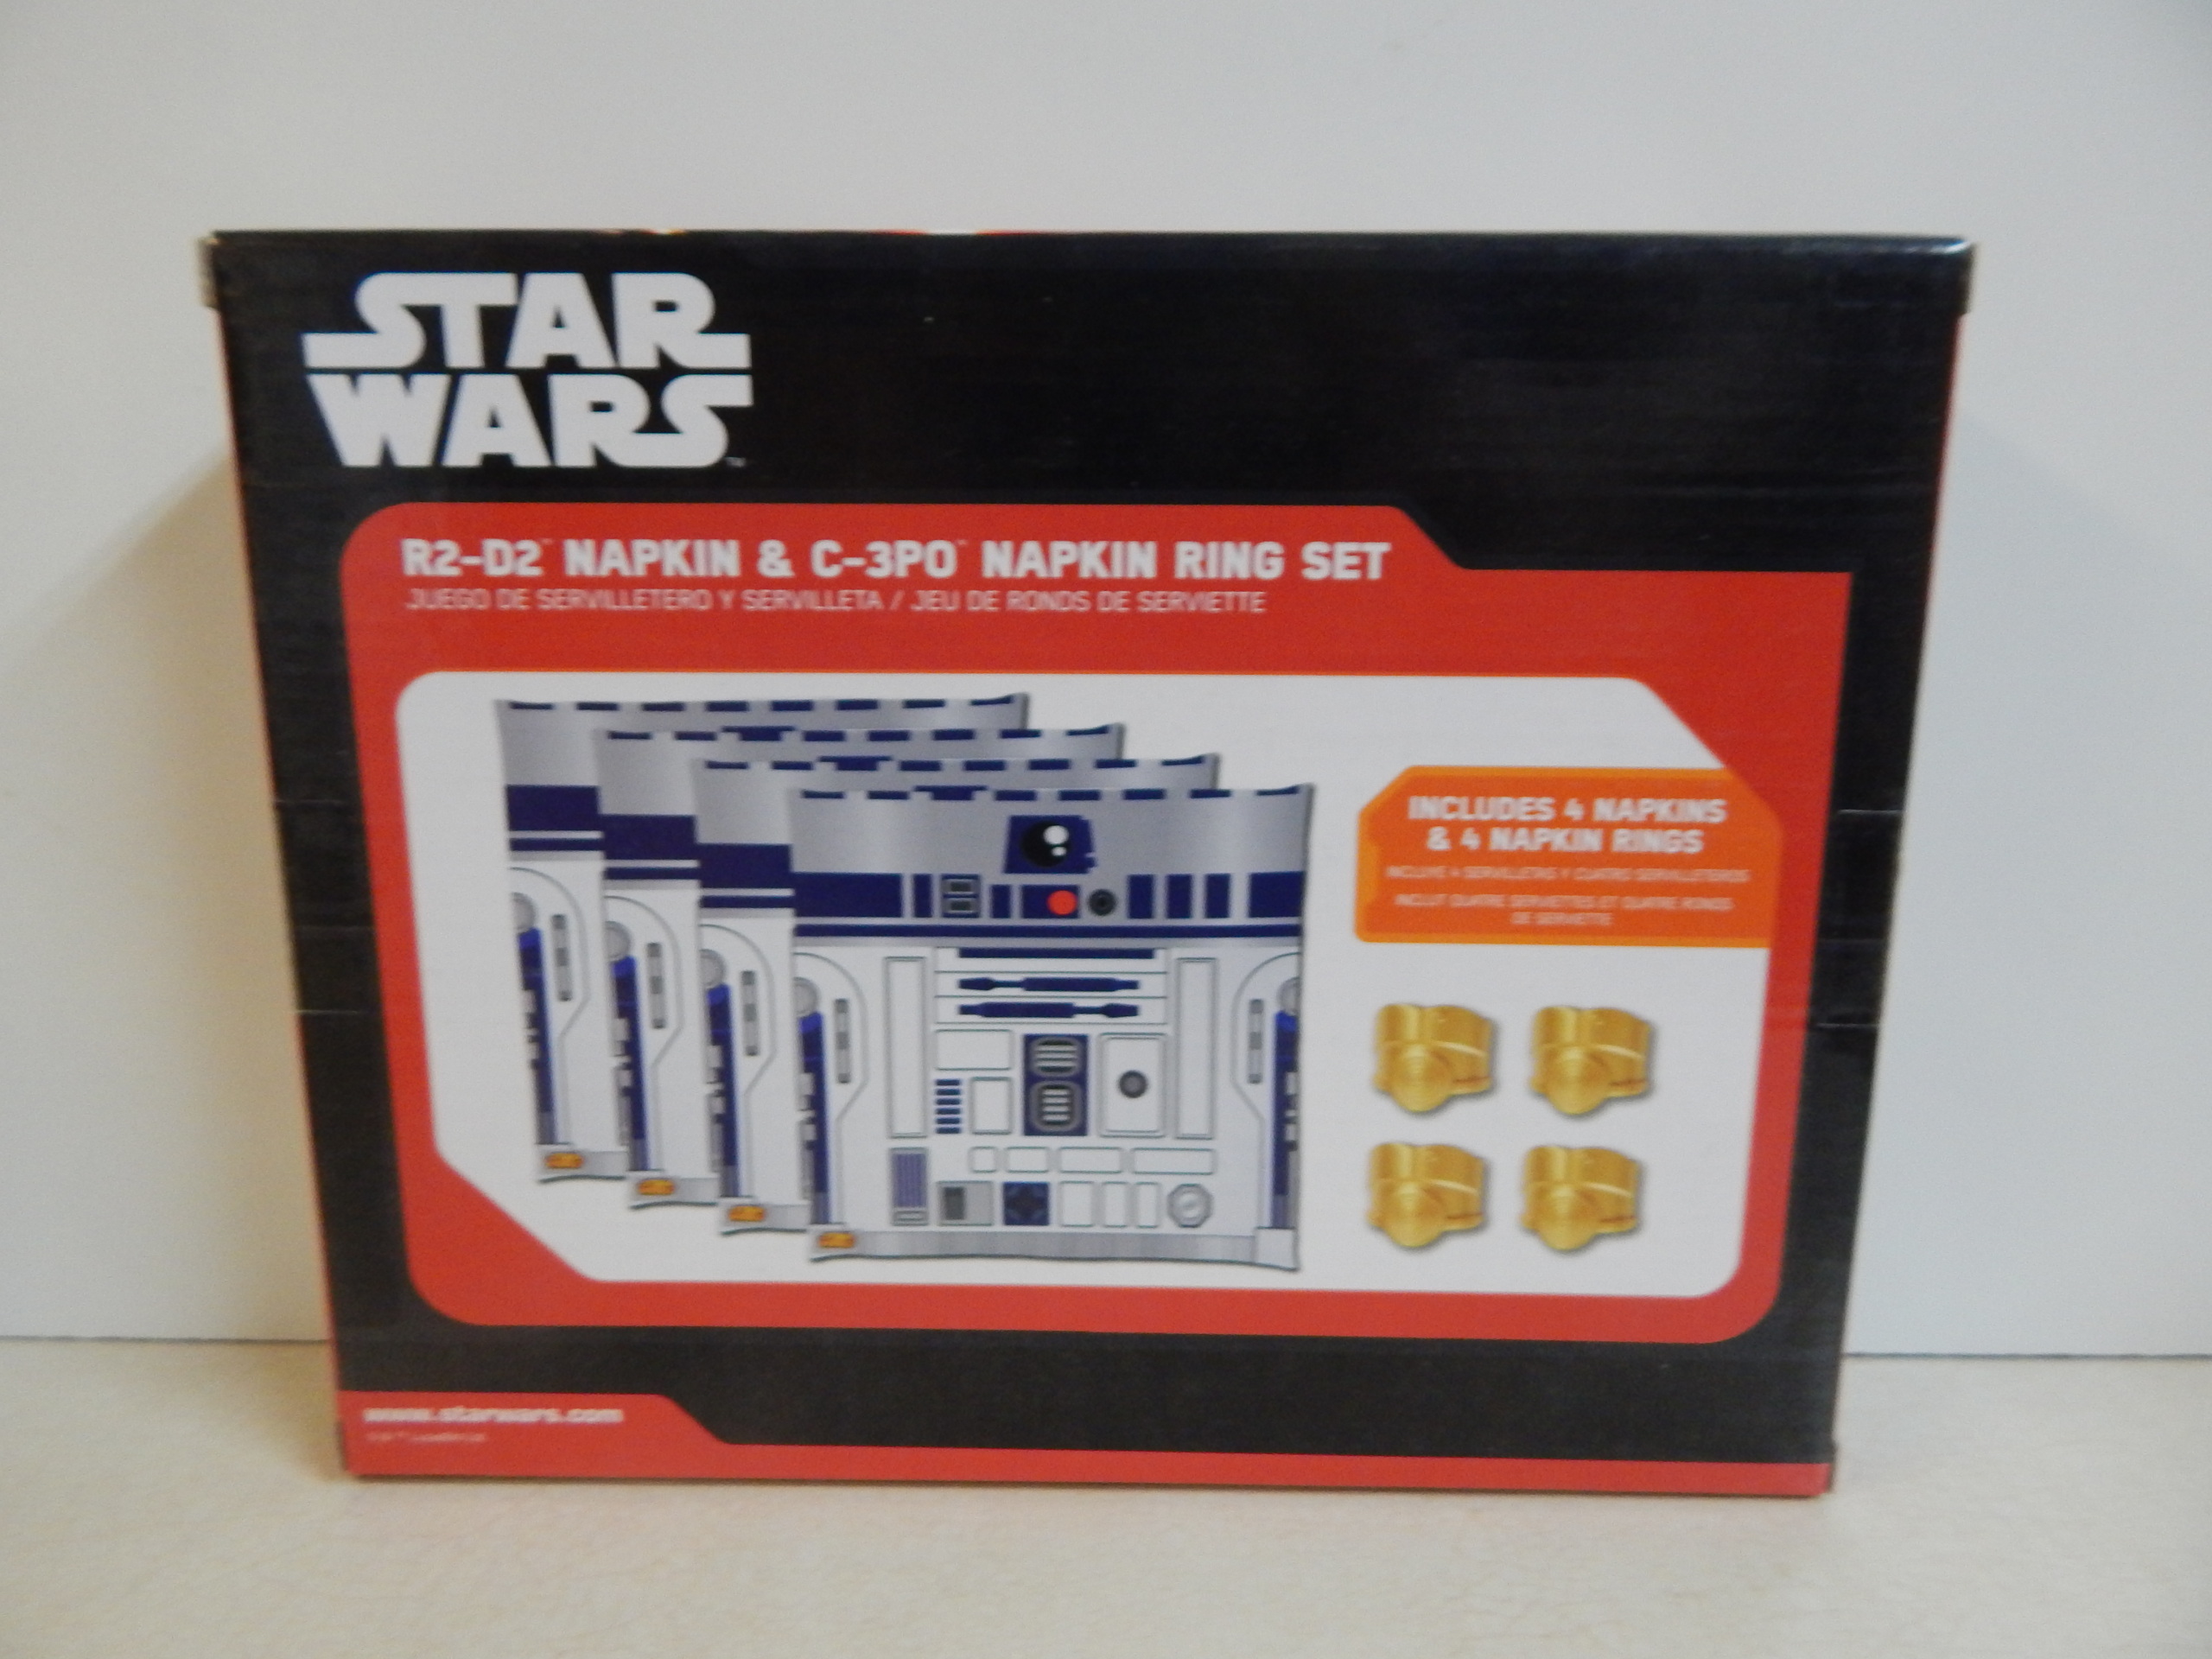 Star Wars R2-D2 Napkin and C-3PO Napkin Ring Set 